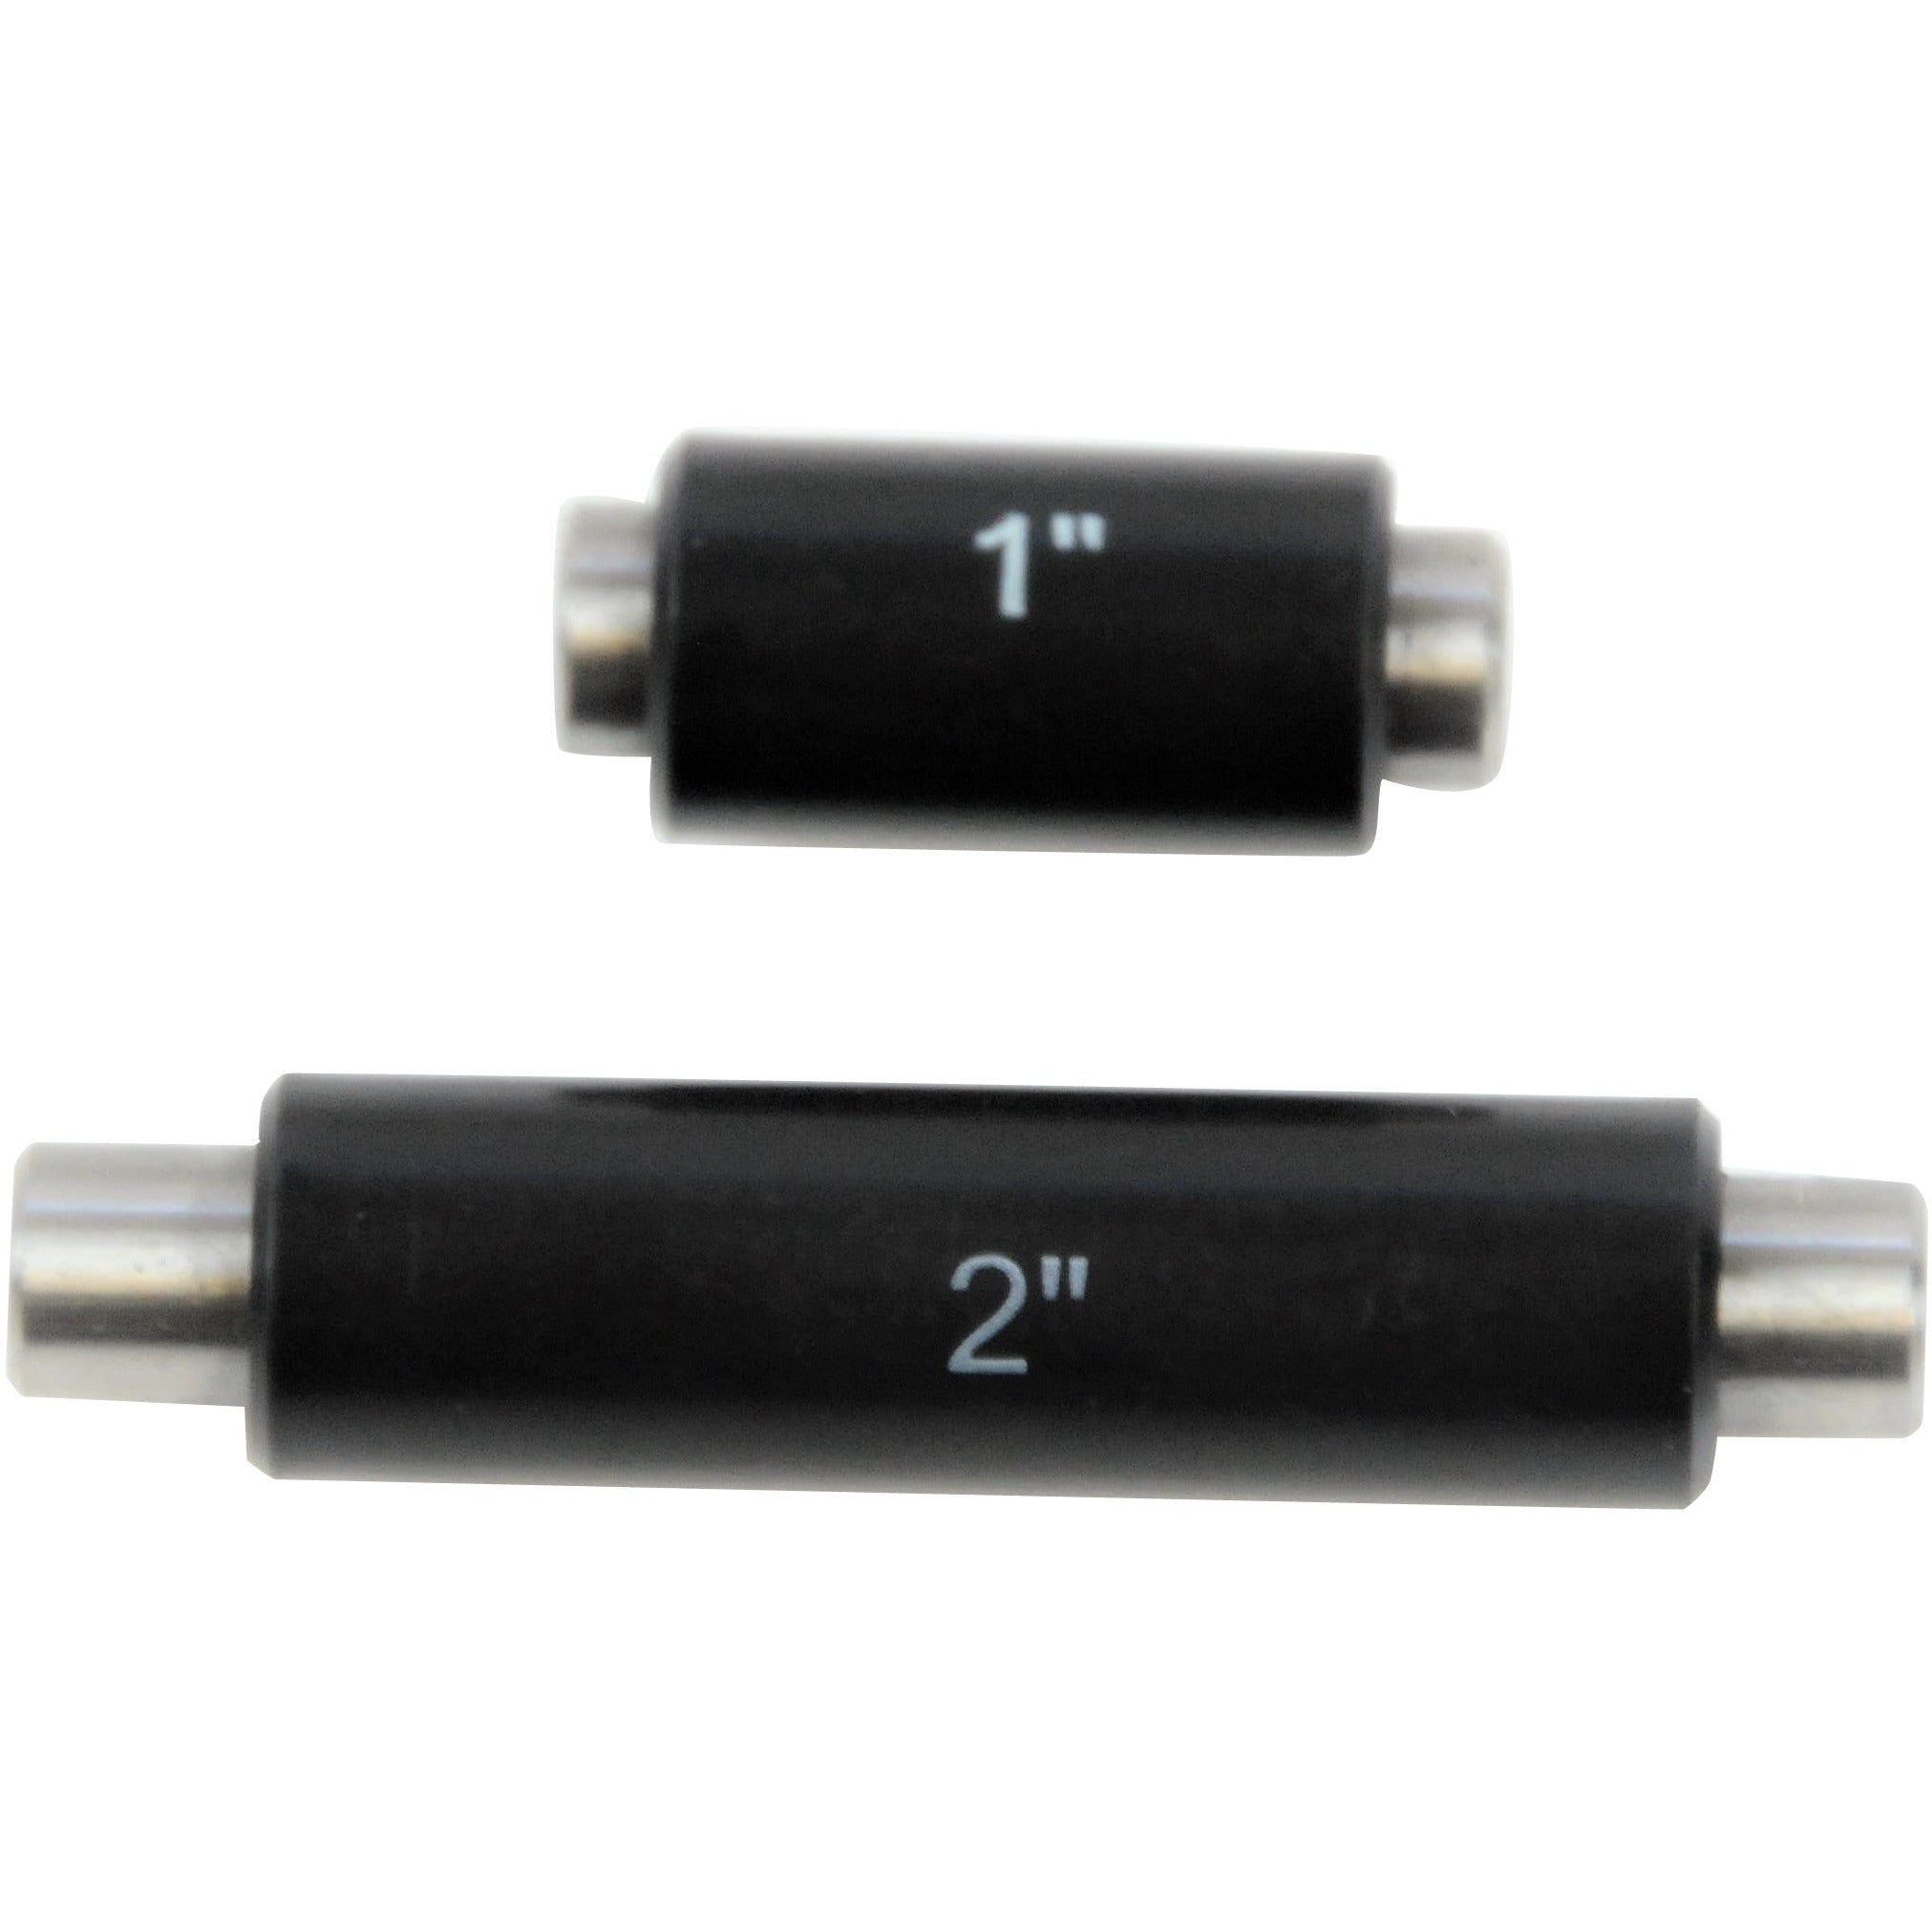 Insize Outside Micrometer Set 0-3" Range Series 3203-33A